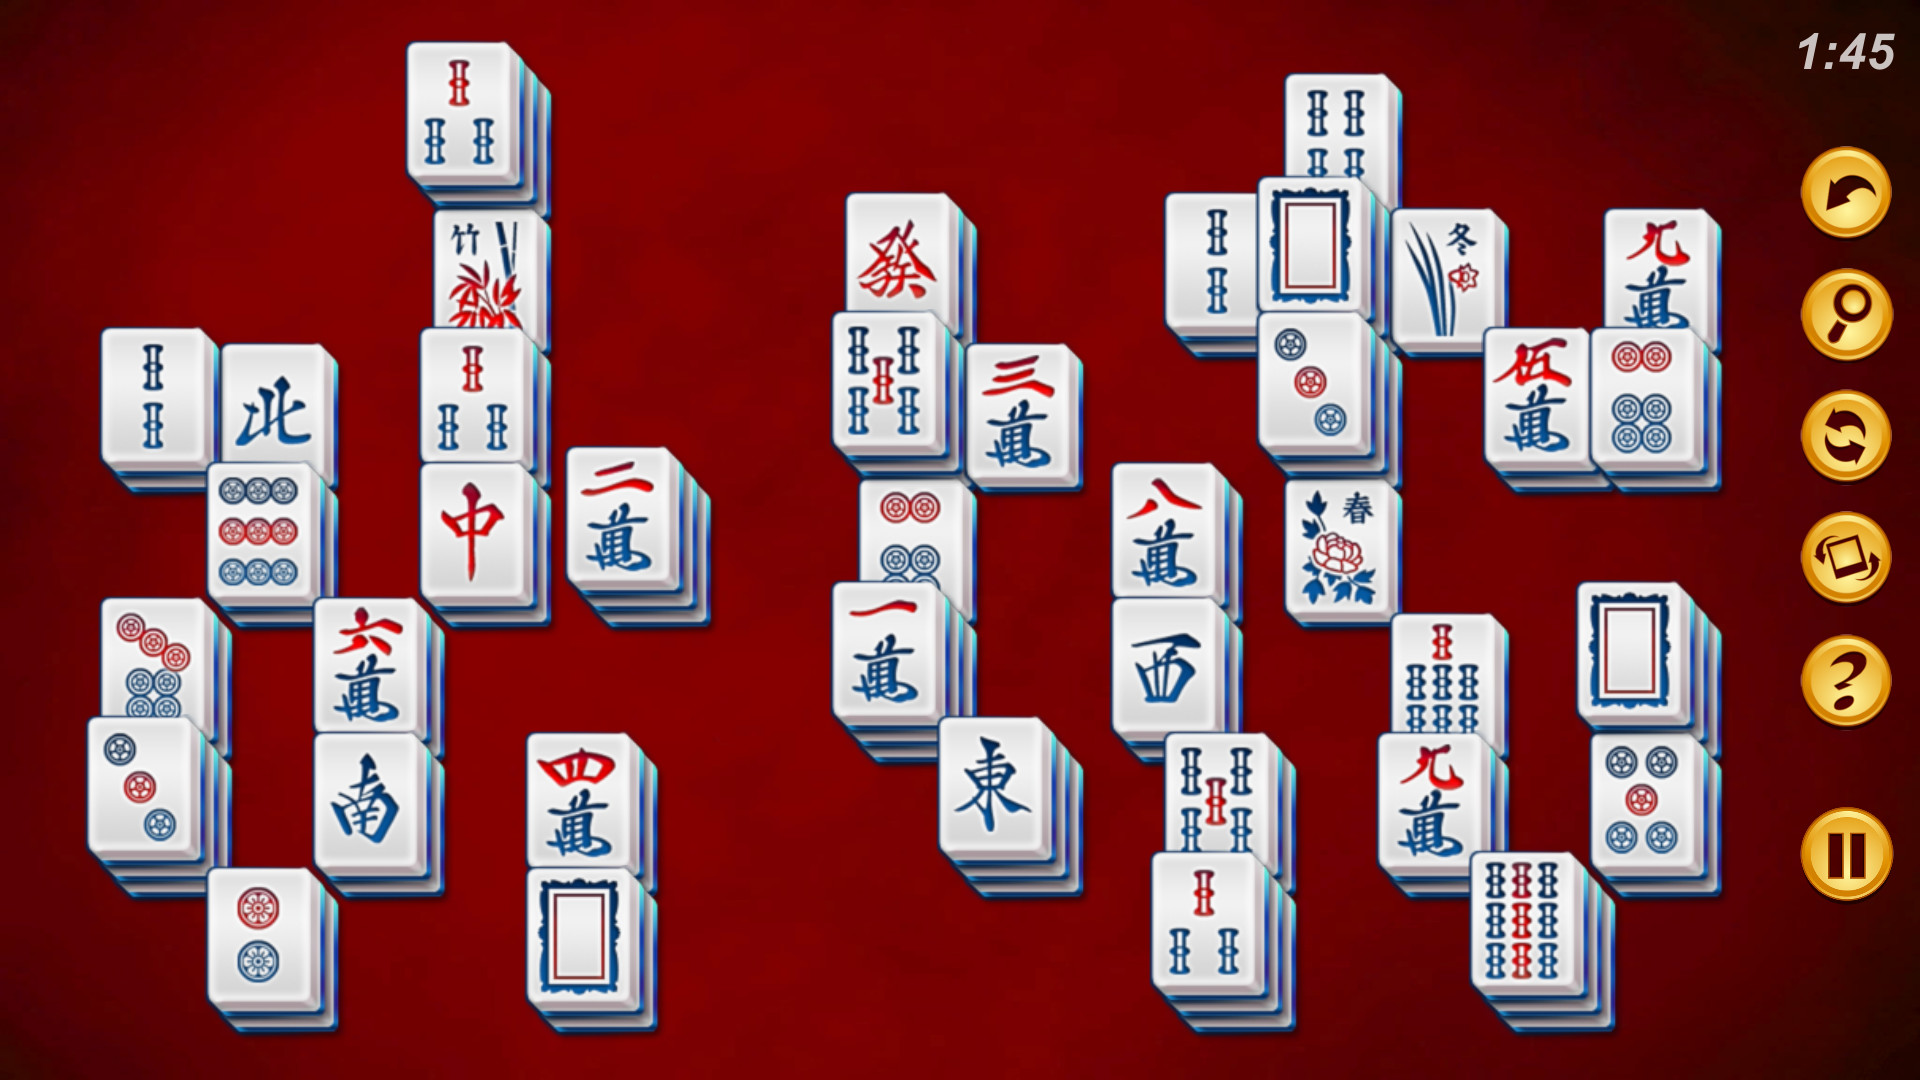 Mahjong Deluxe on Steam